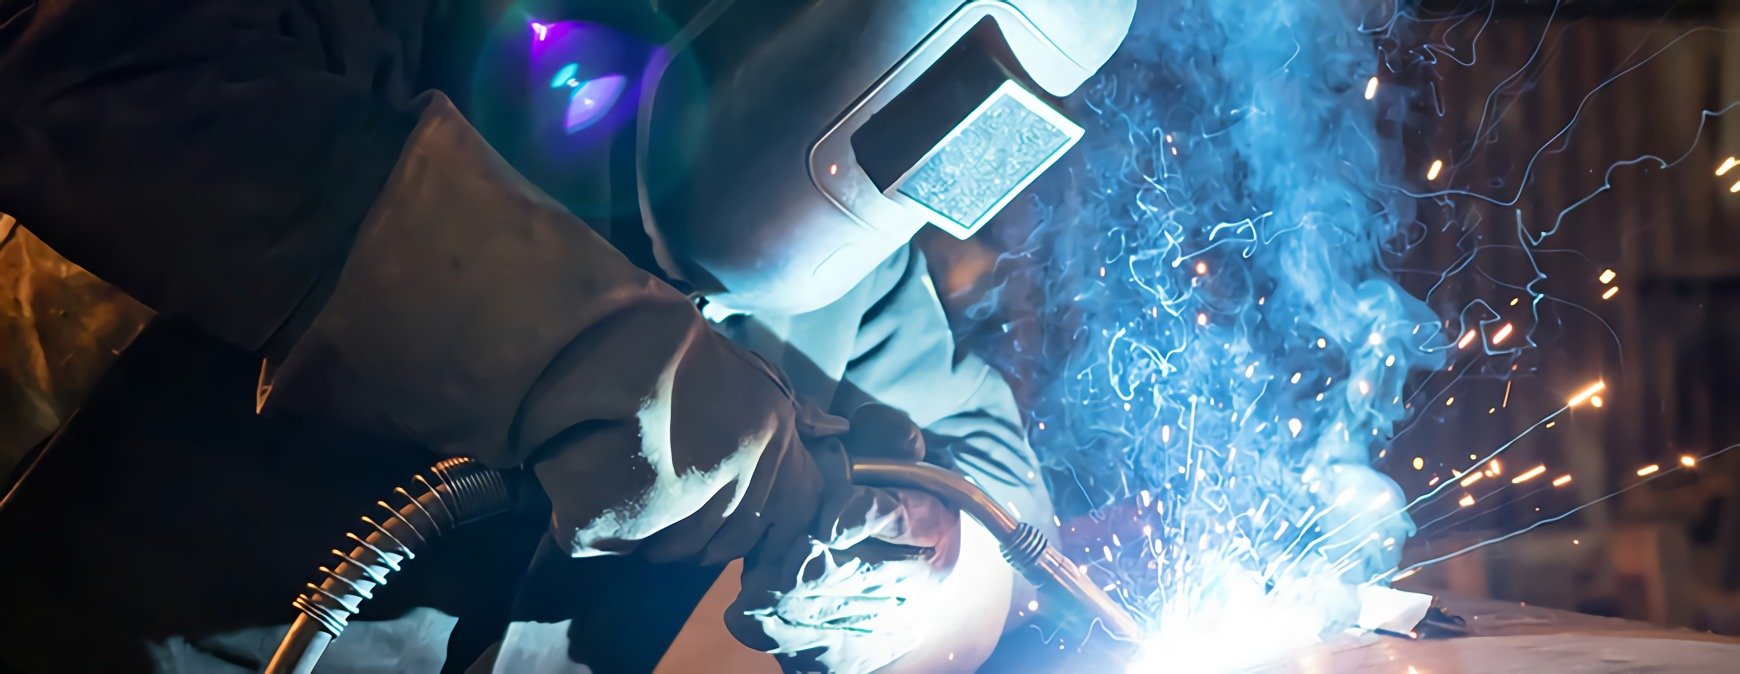 welding shield gases